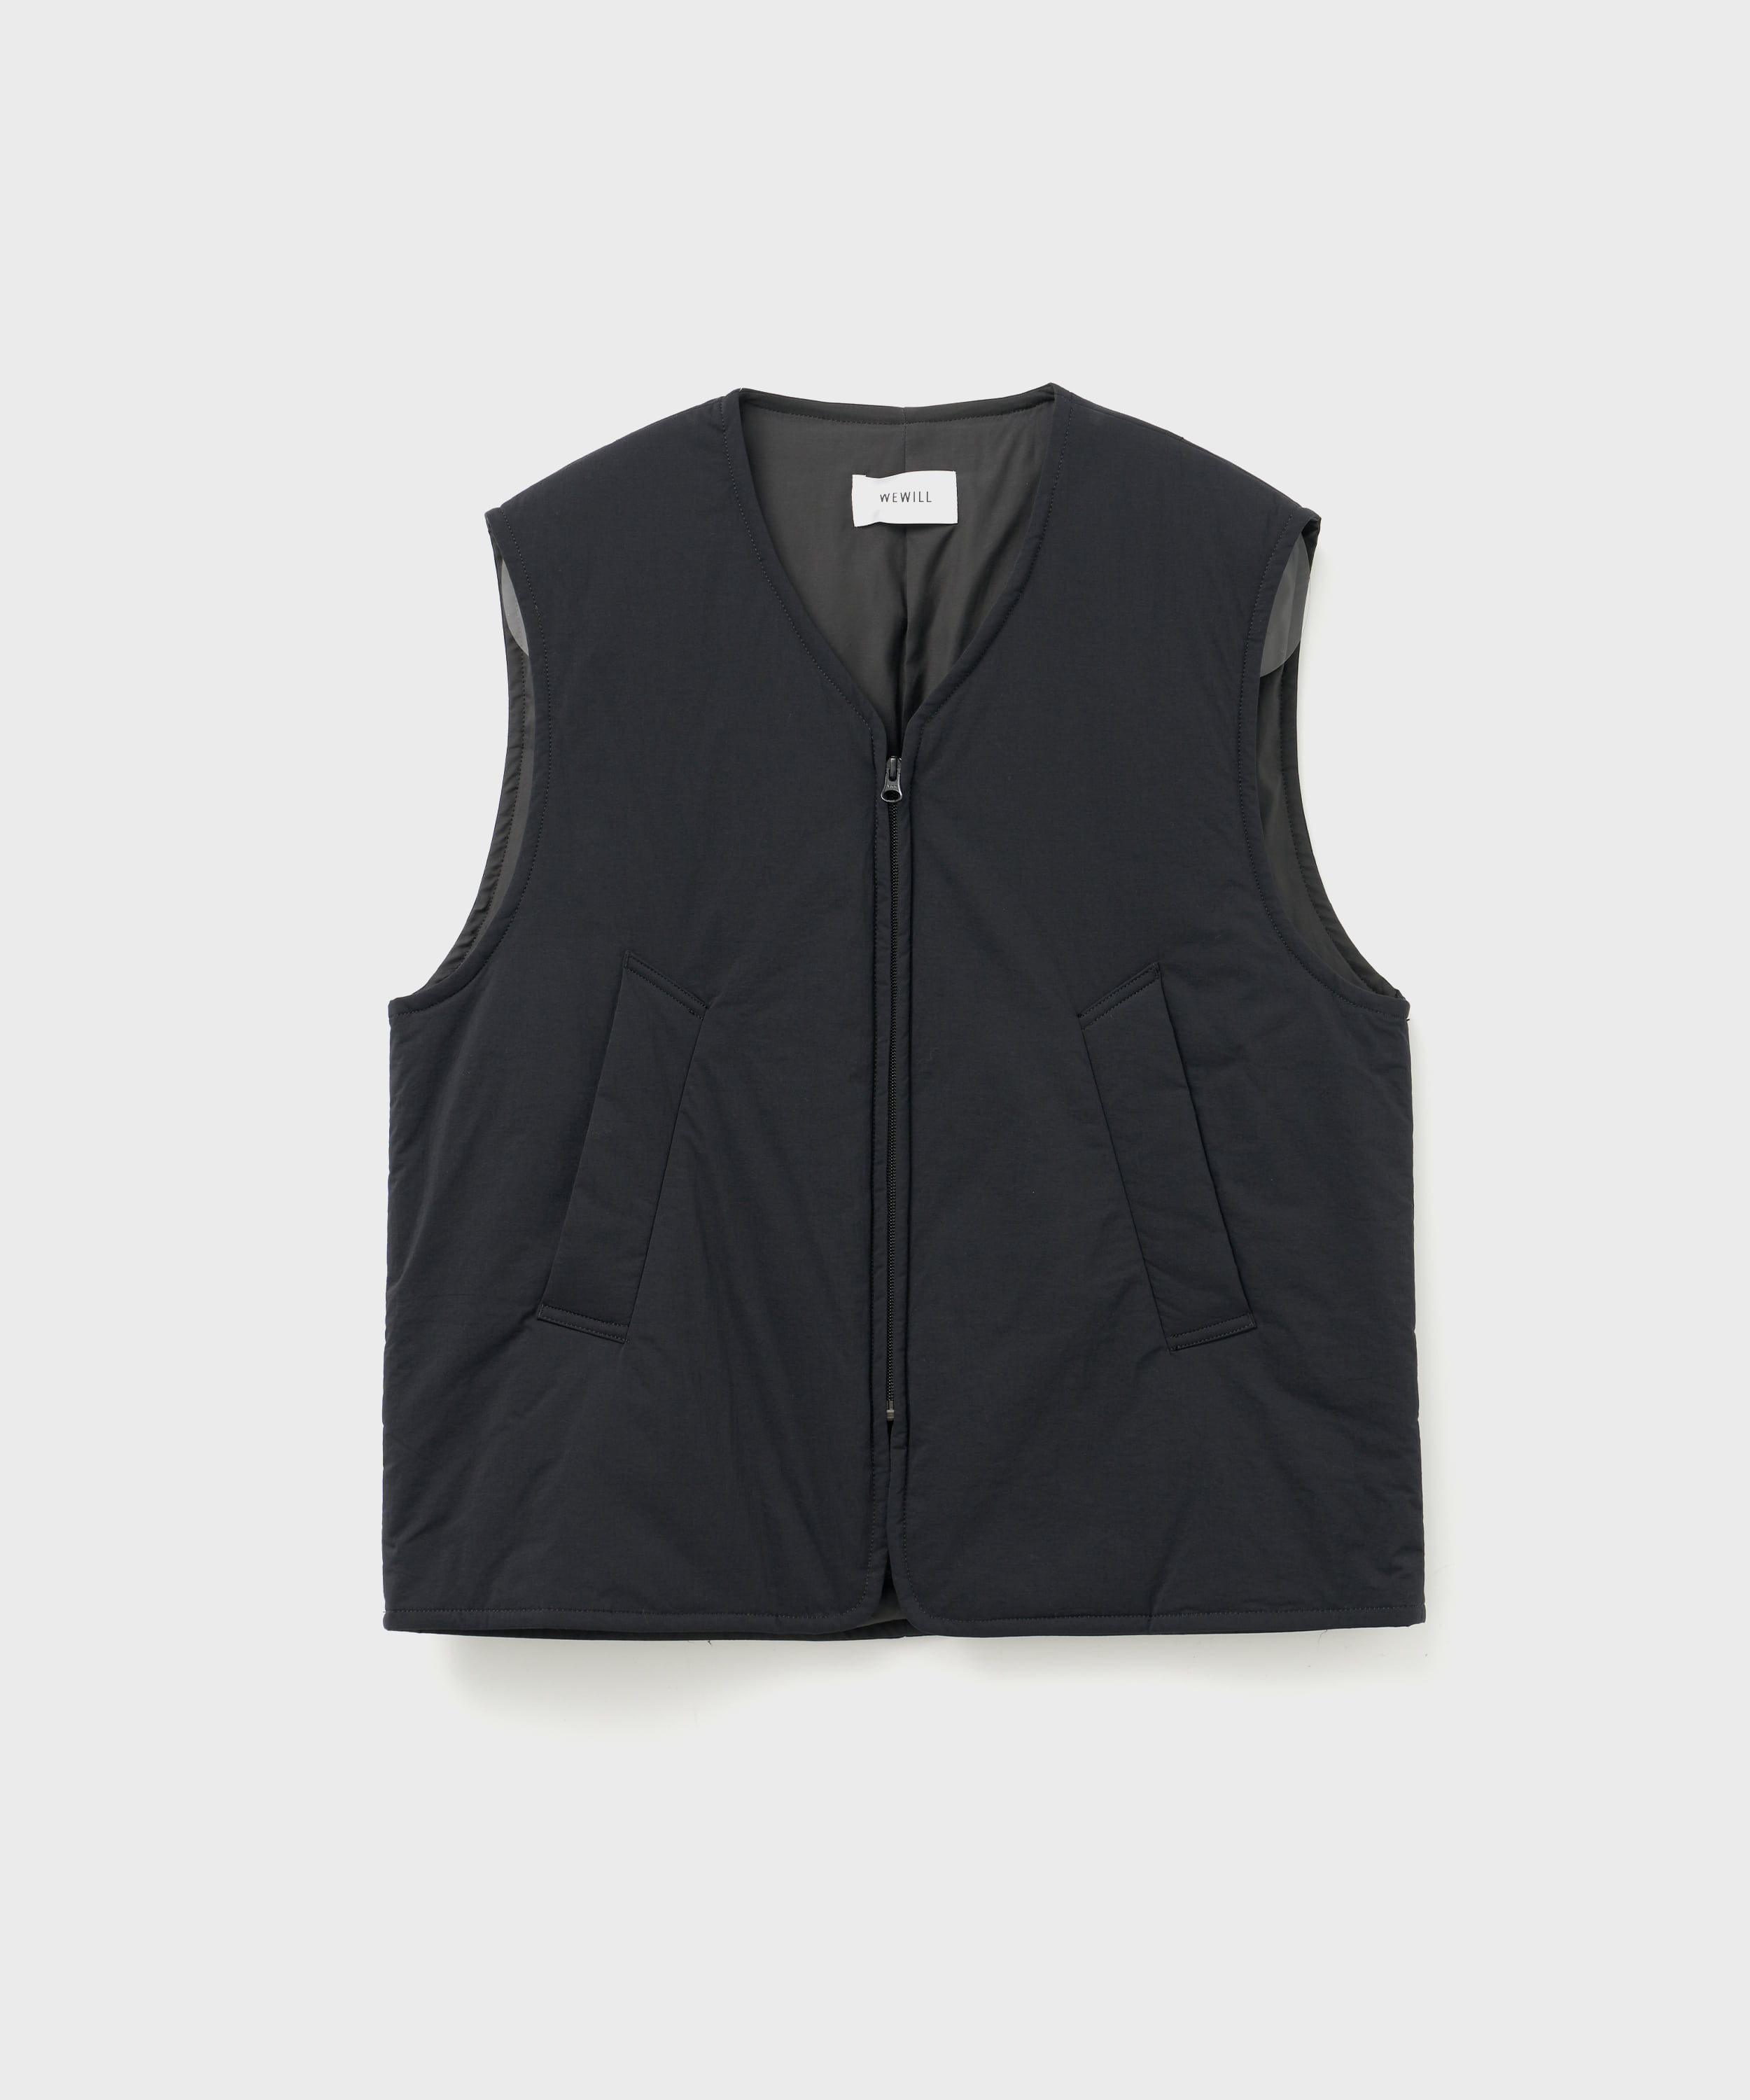 insider Vest (Black)